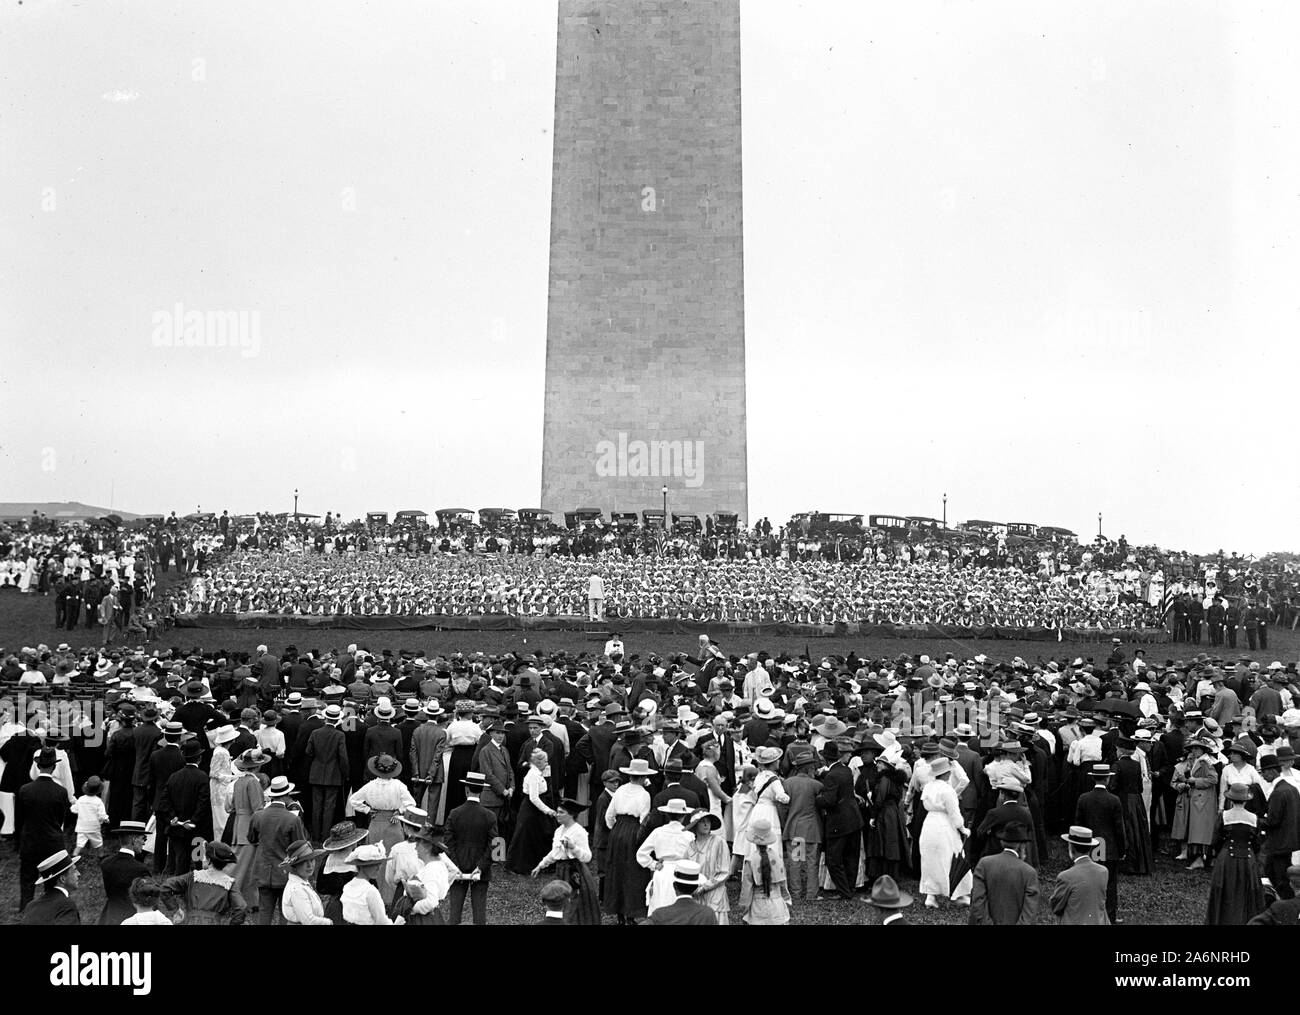 1917 Confederate Reunion - Human flag on Washington Monument grounds Stock Photo